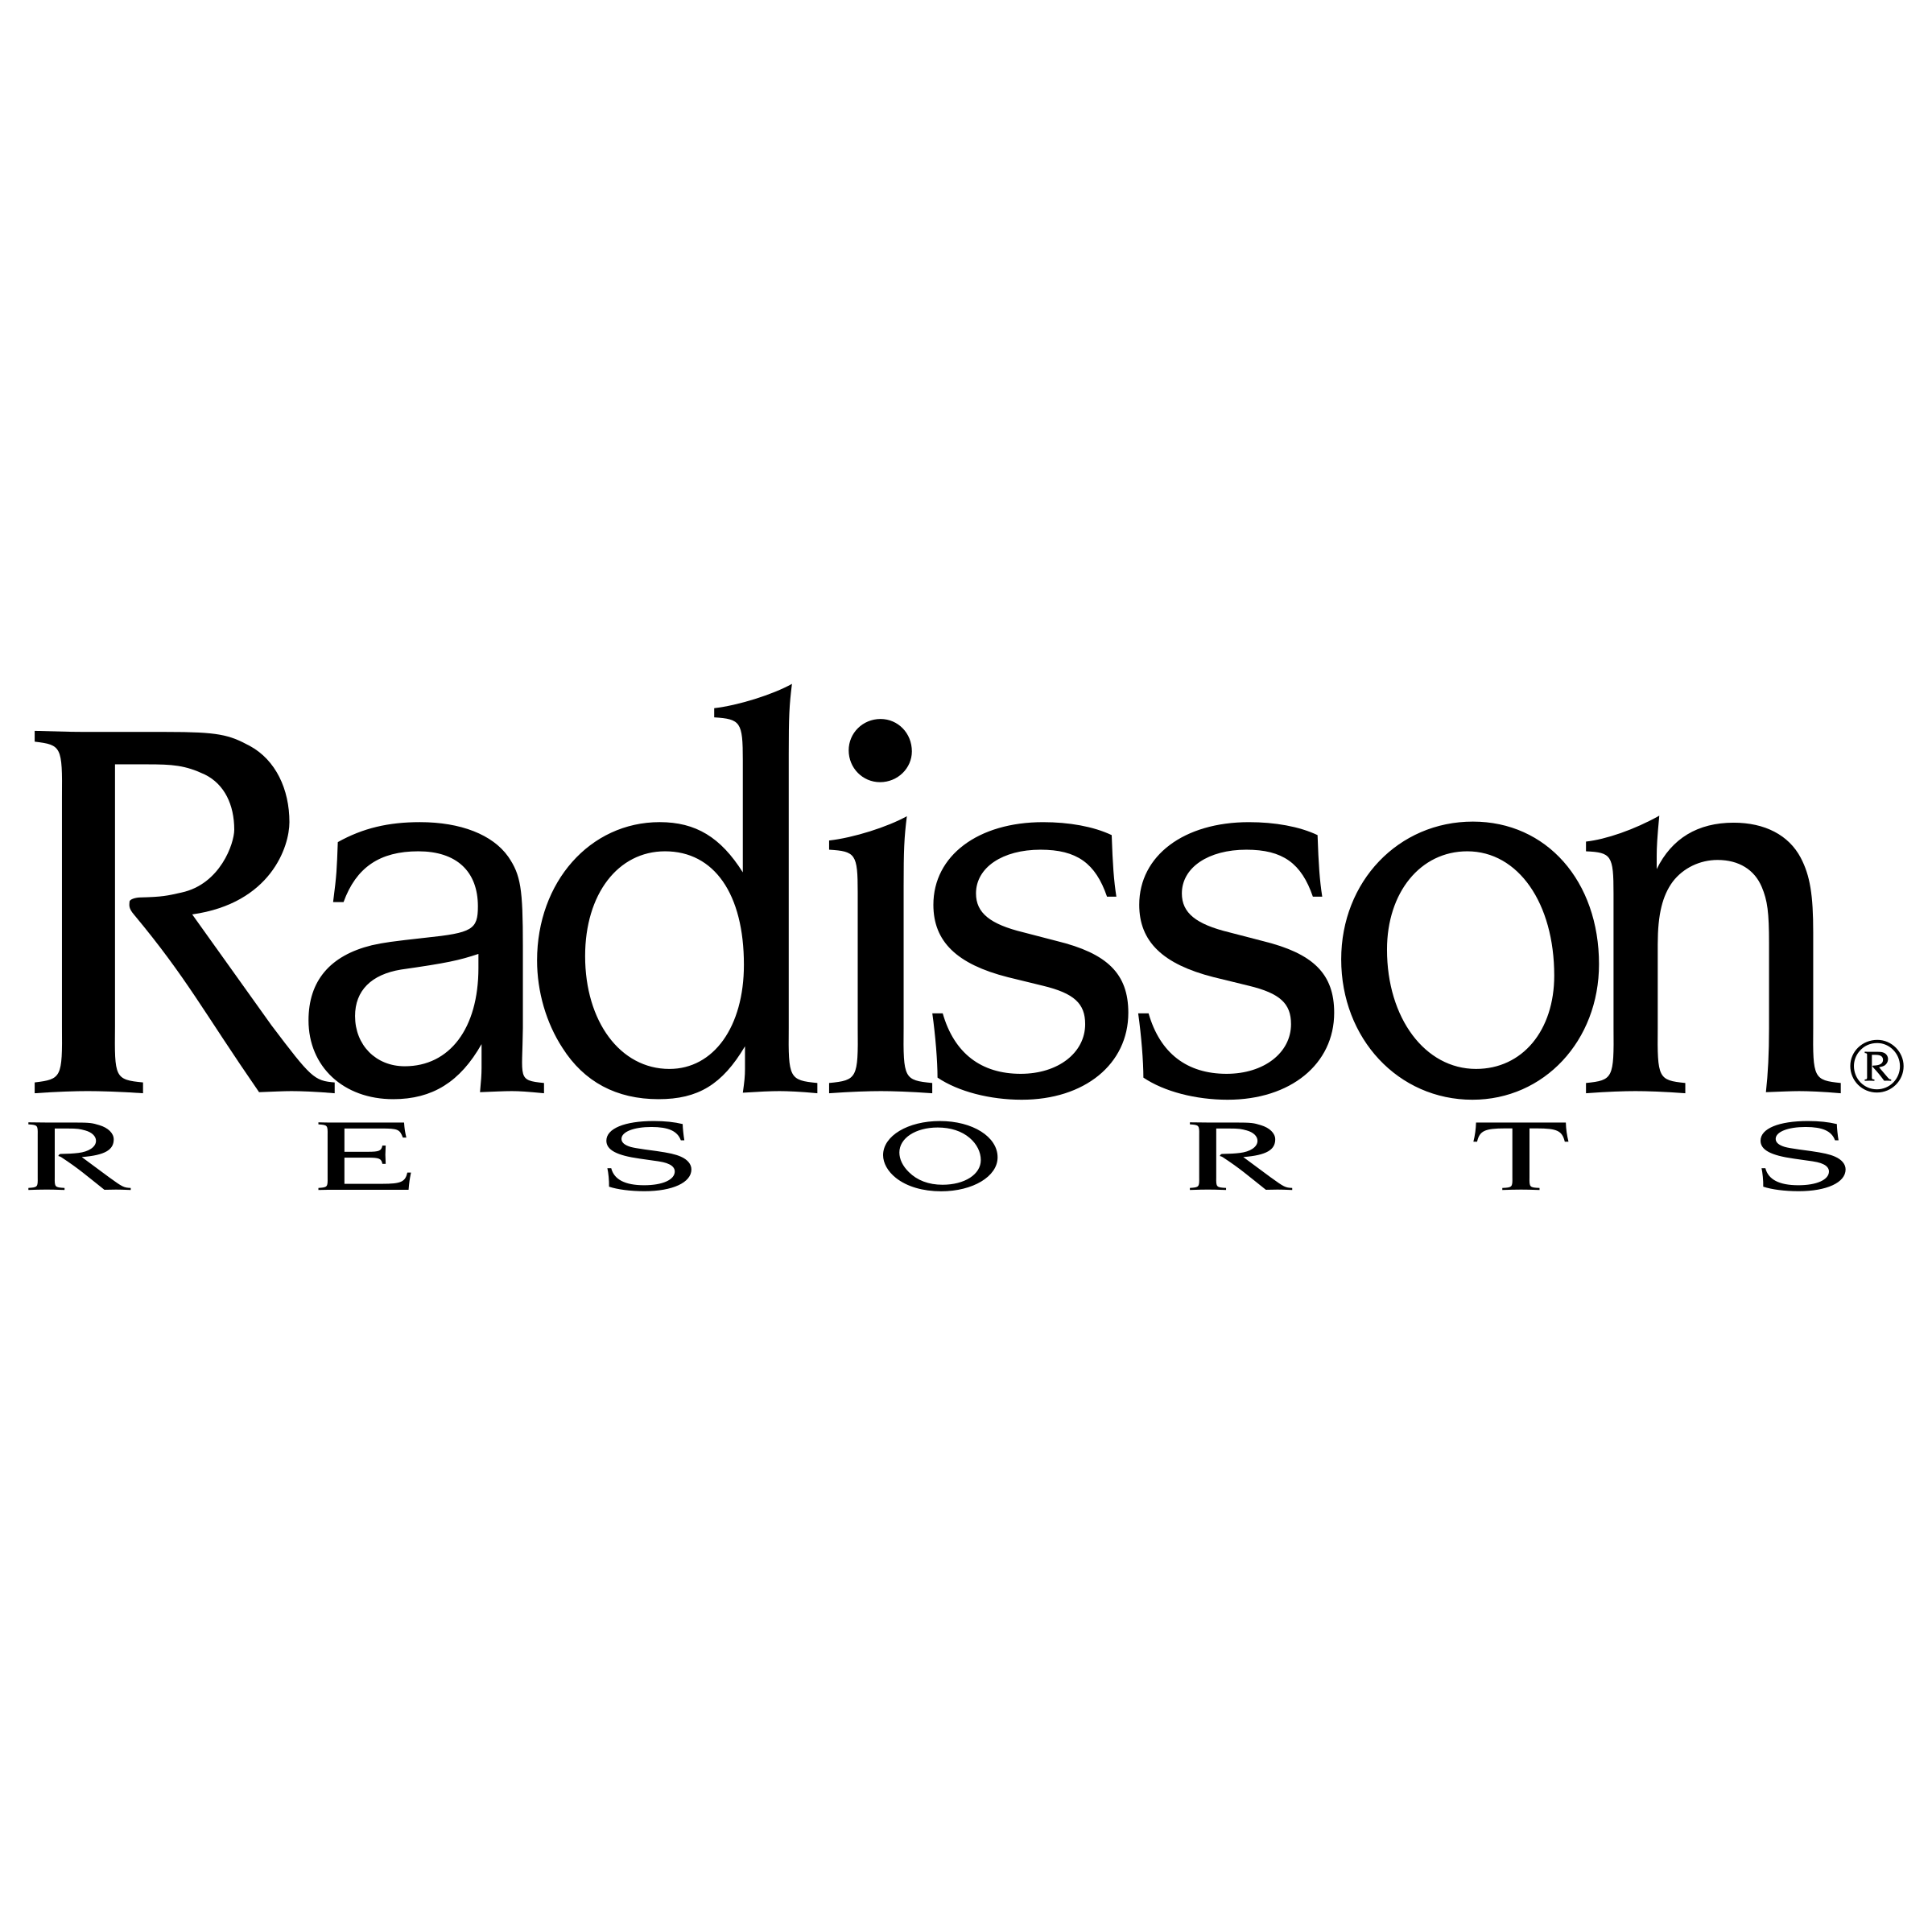 Radisson Logo - Radisson Resorts Logo PNG Transparent & SVG Vector - Freebie Supply